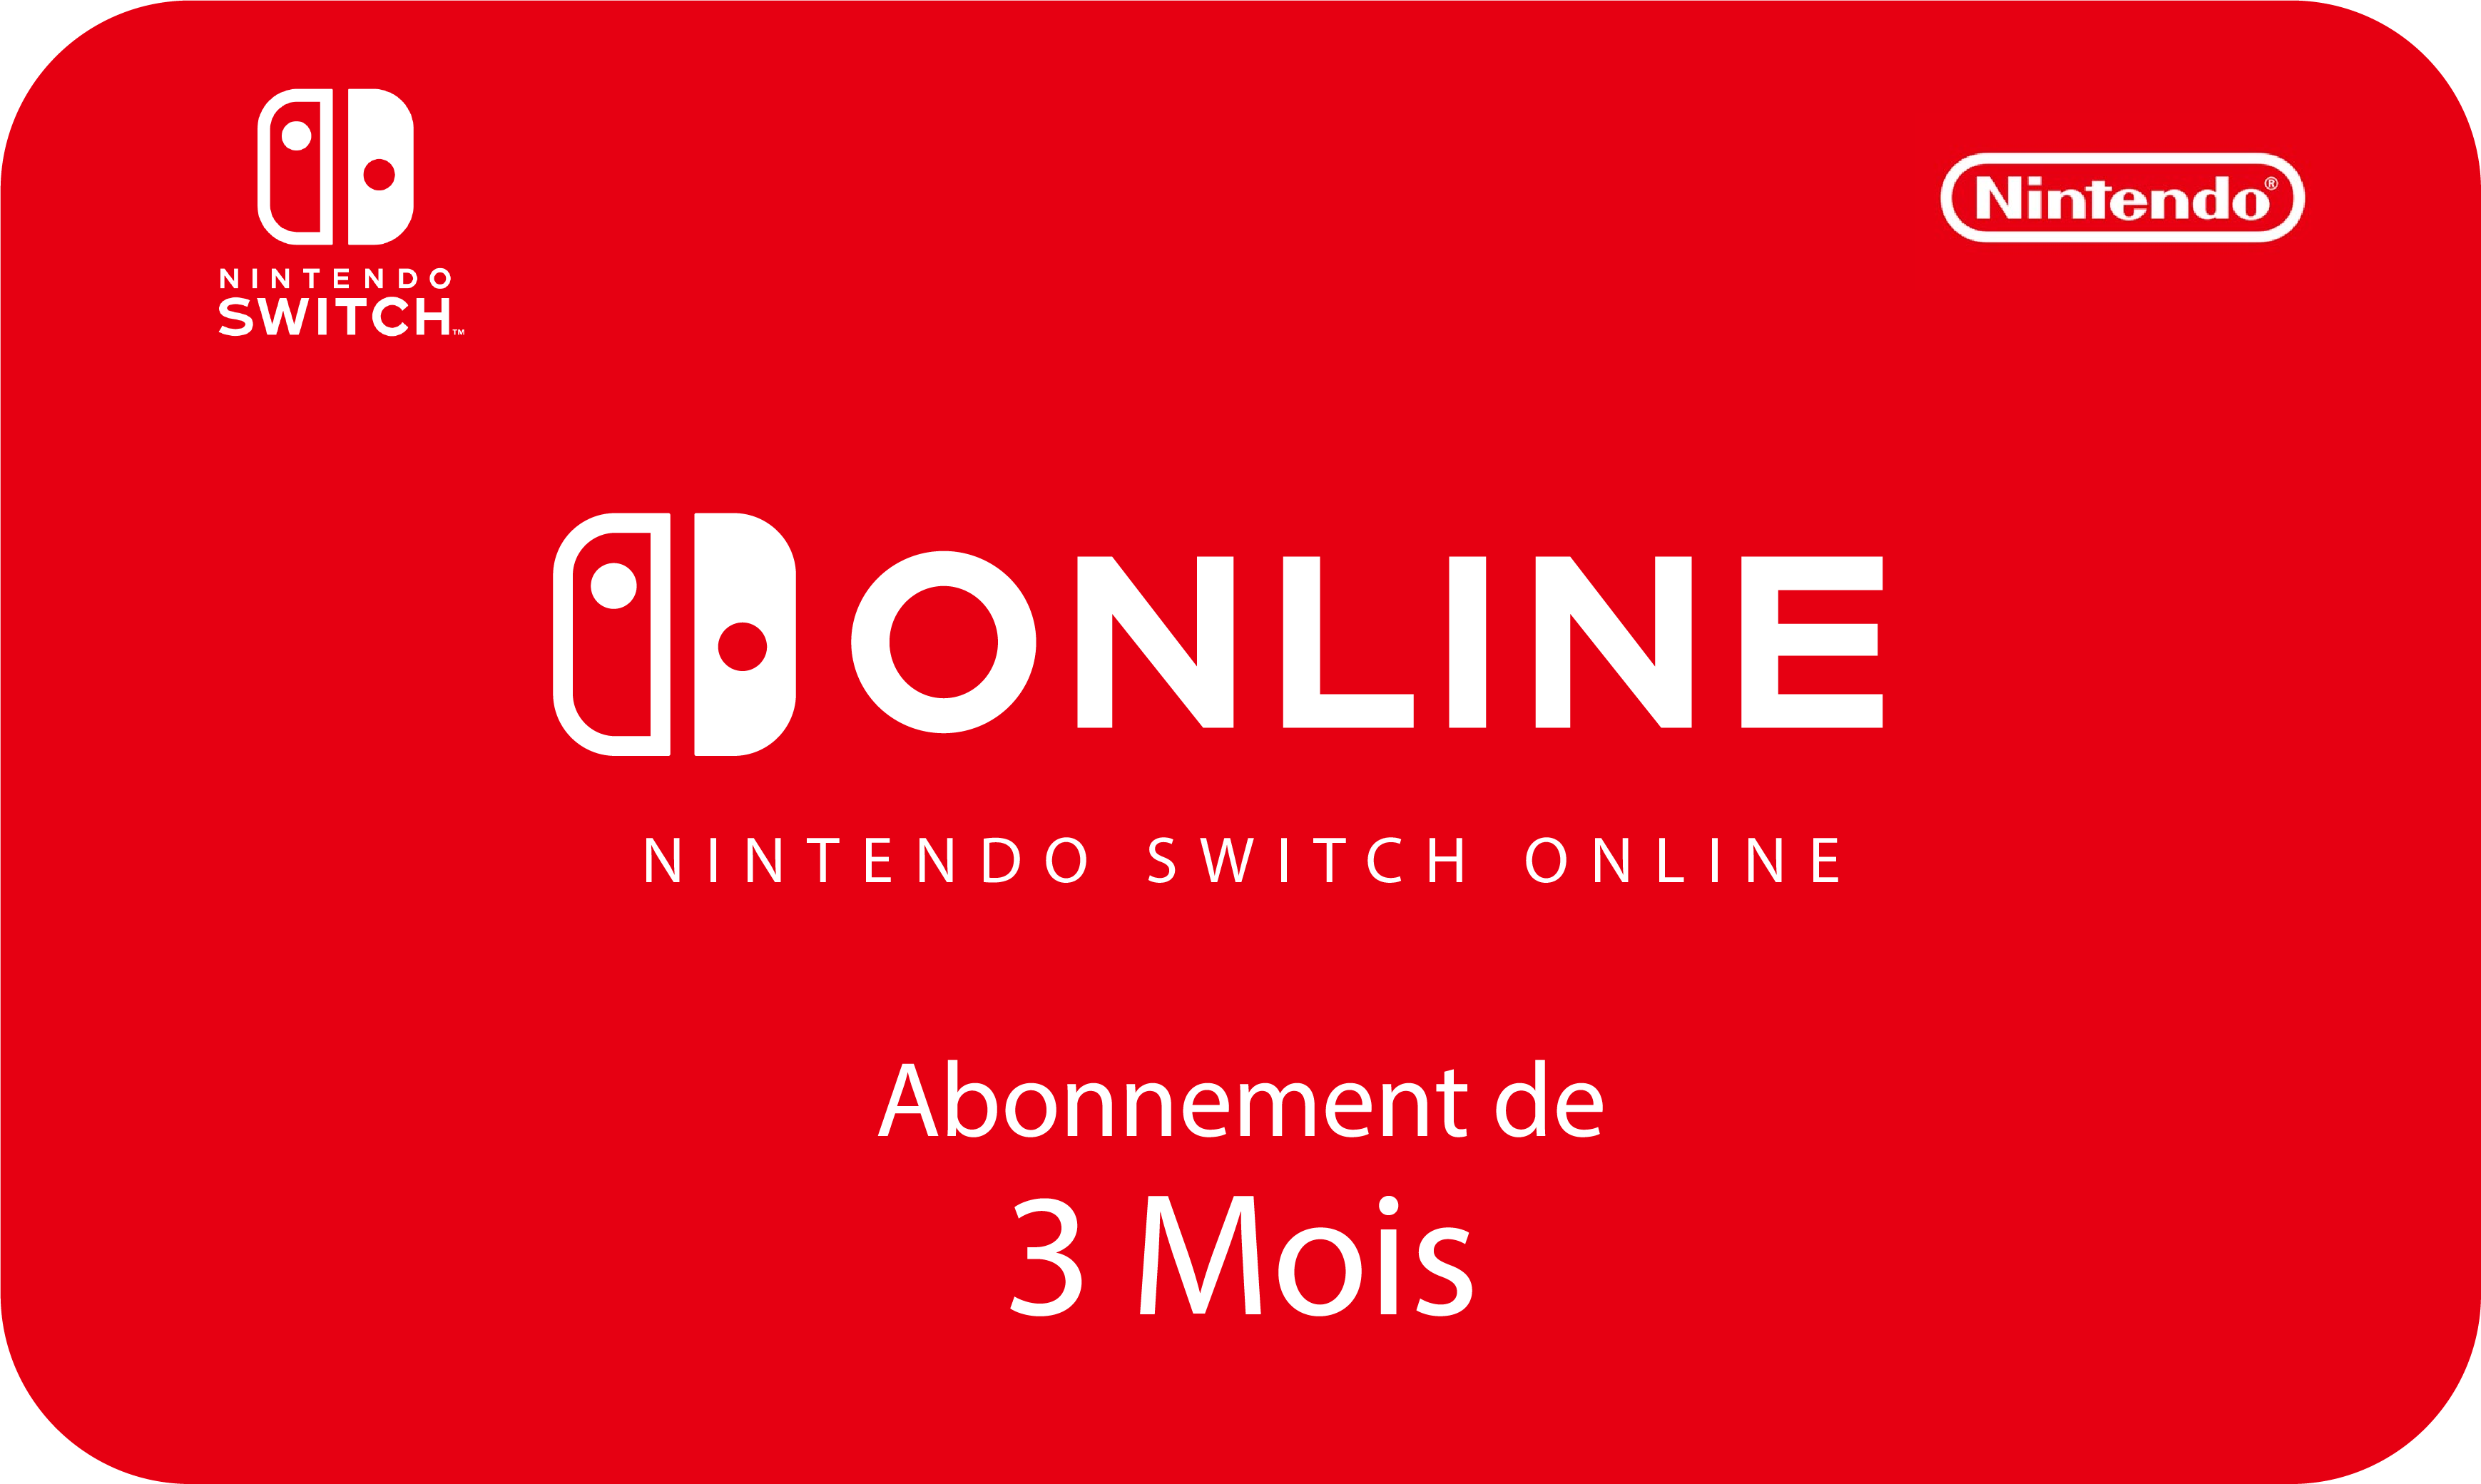 Nintendo Switch Online 3 mois